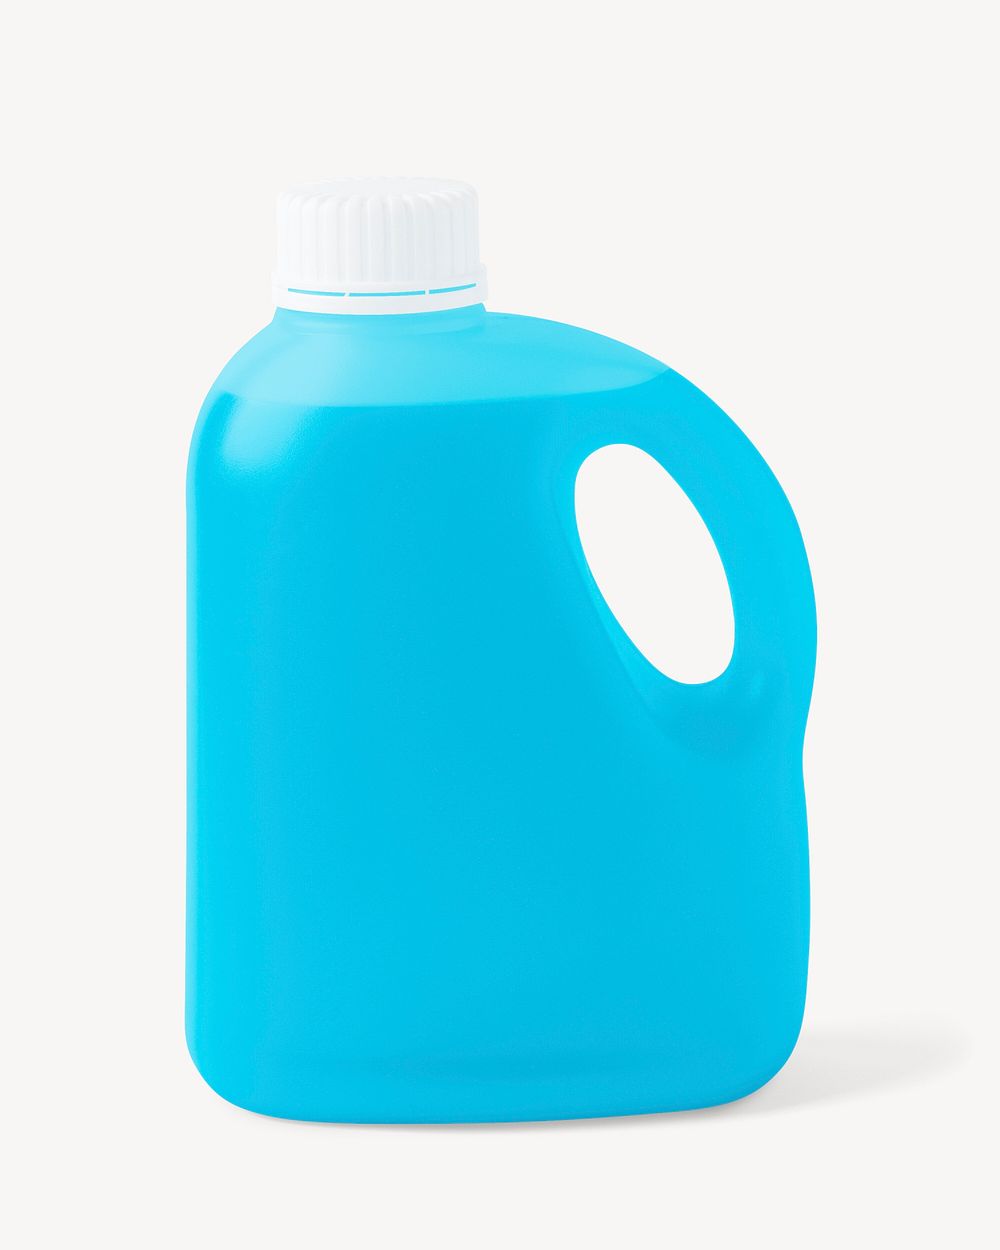 Blue gallon, product mockup psd